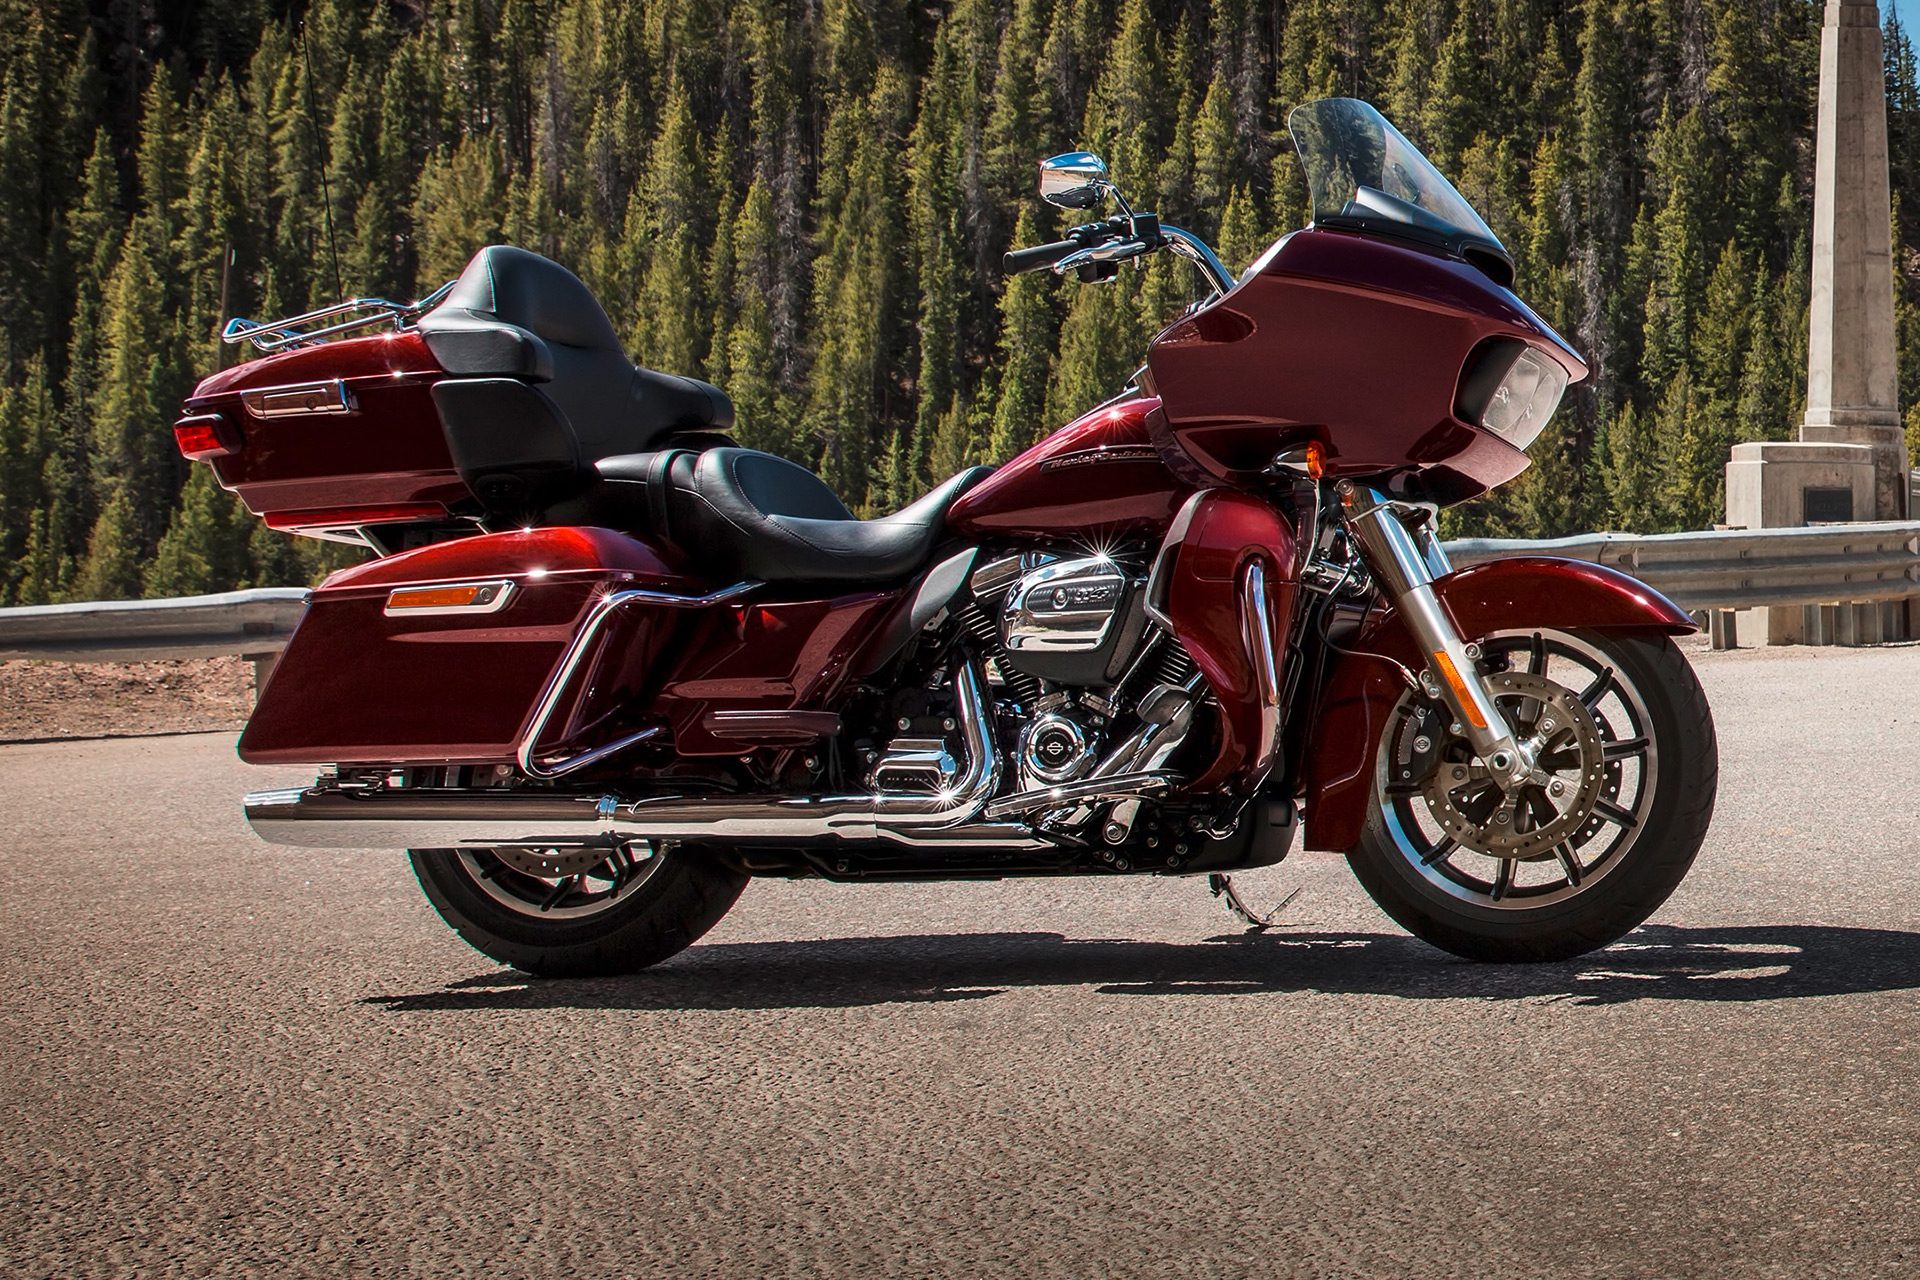 New Harley Davidson Models 2019 Thunderbike